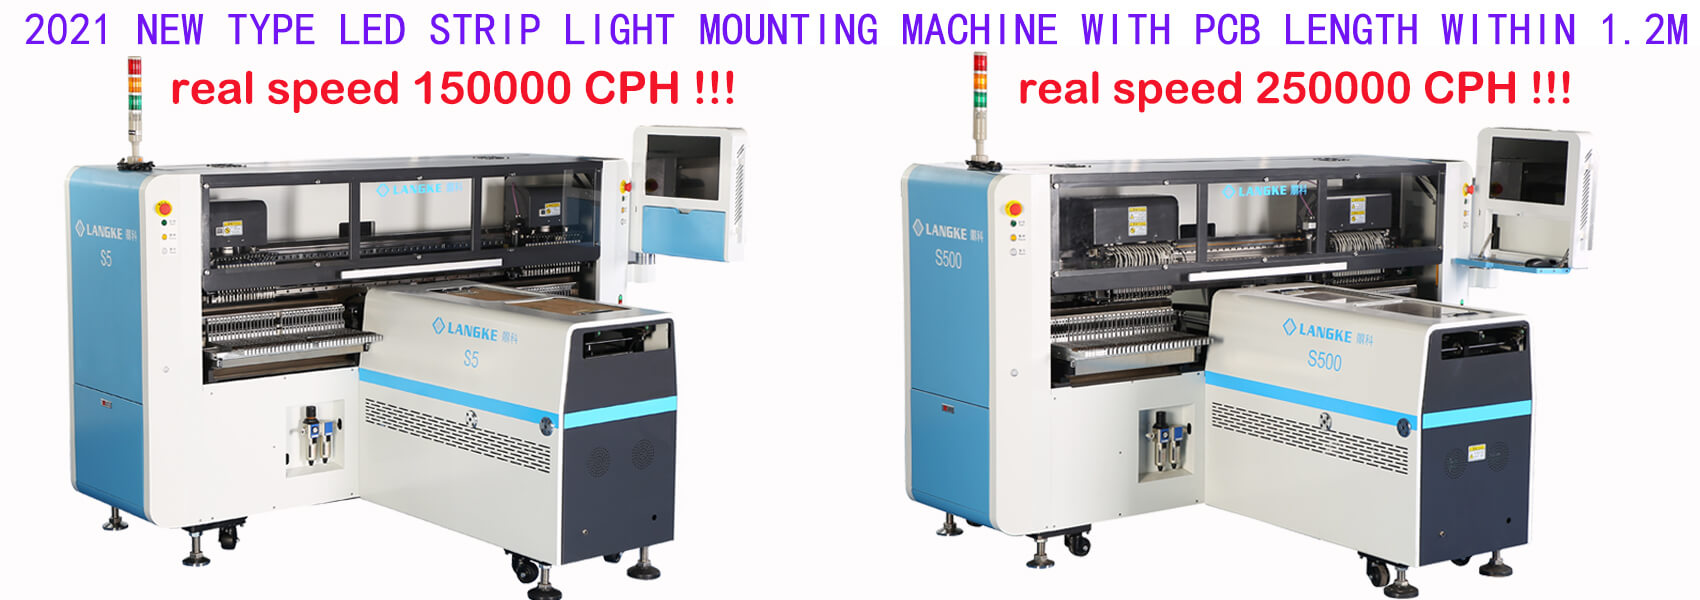 FPCB LED Strip light production machine